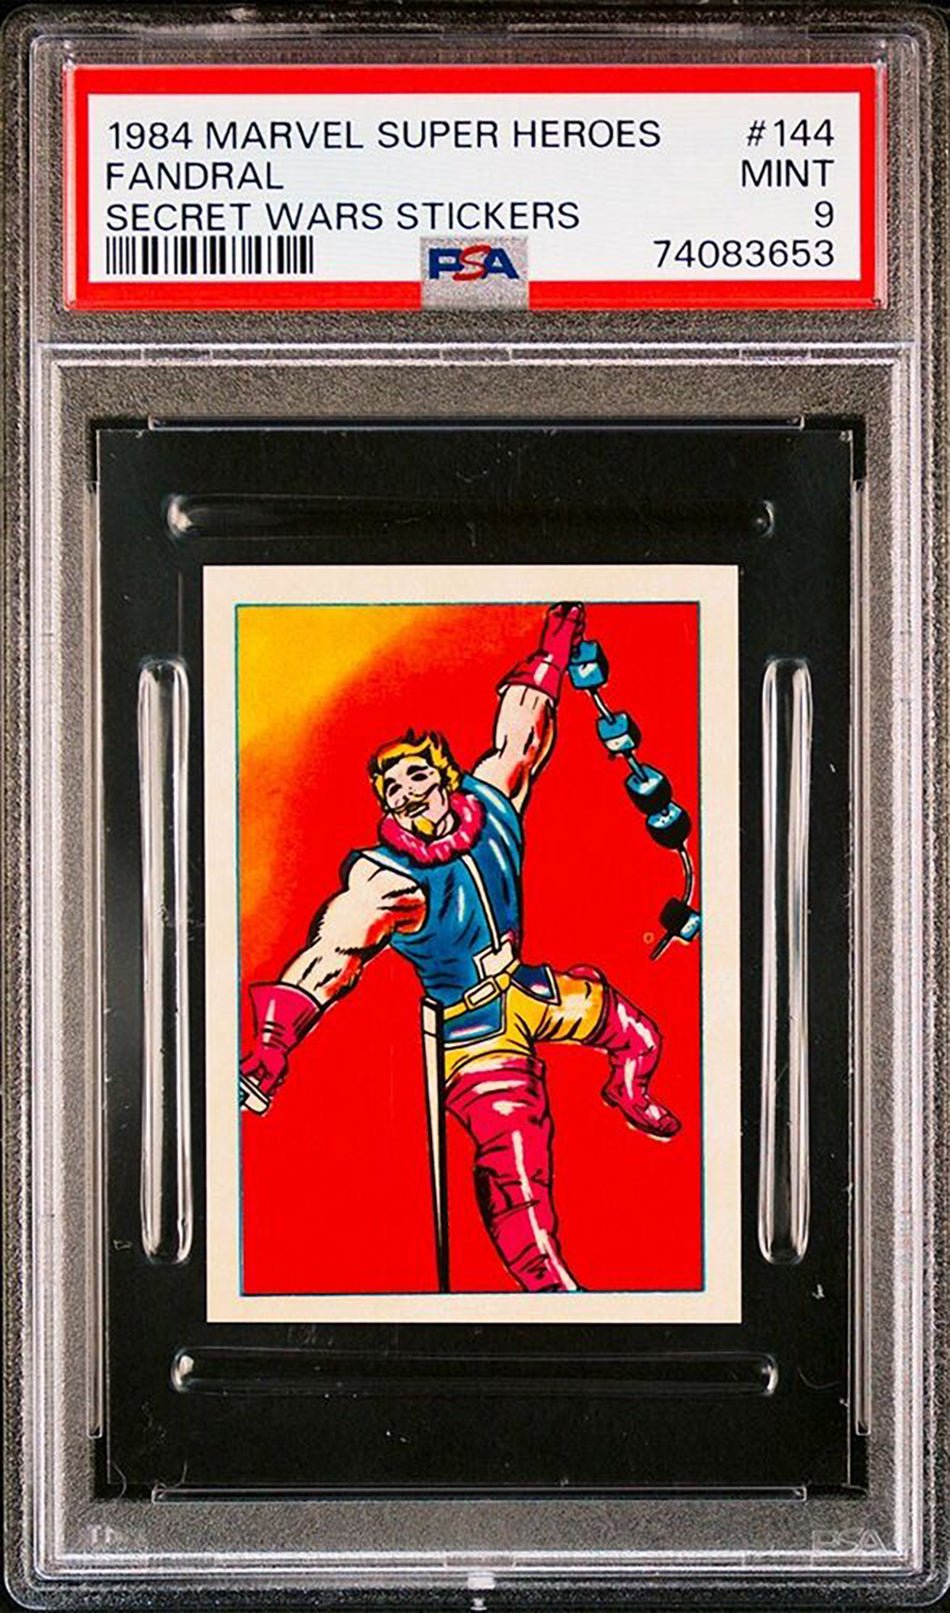 FANDRAL PSA 9 1984 Marvel Super Heroes Secret Wars Stickers #144 C1 Marvel Graded Cards Sticker - Hobby Gems